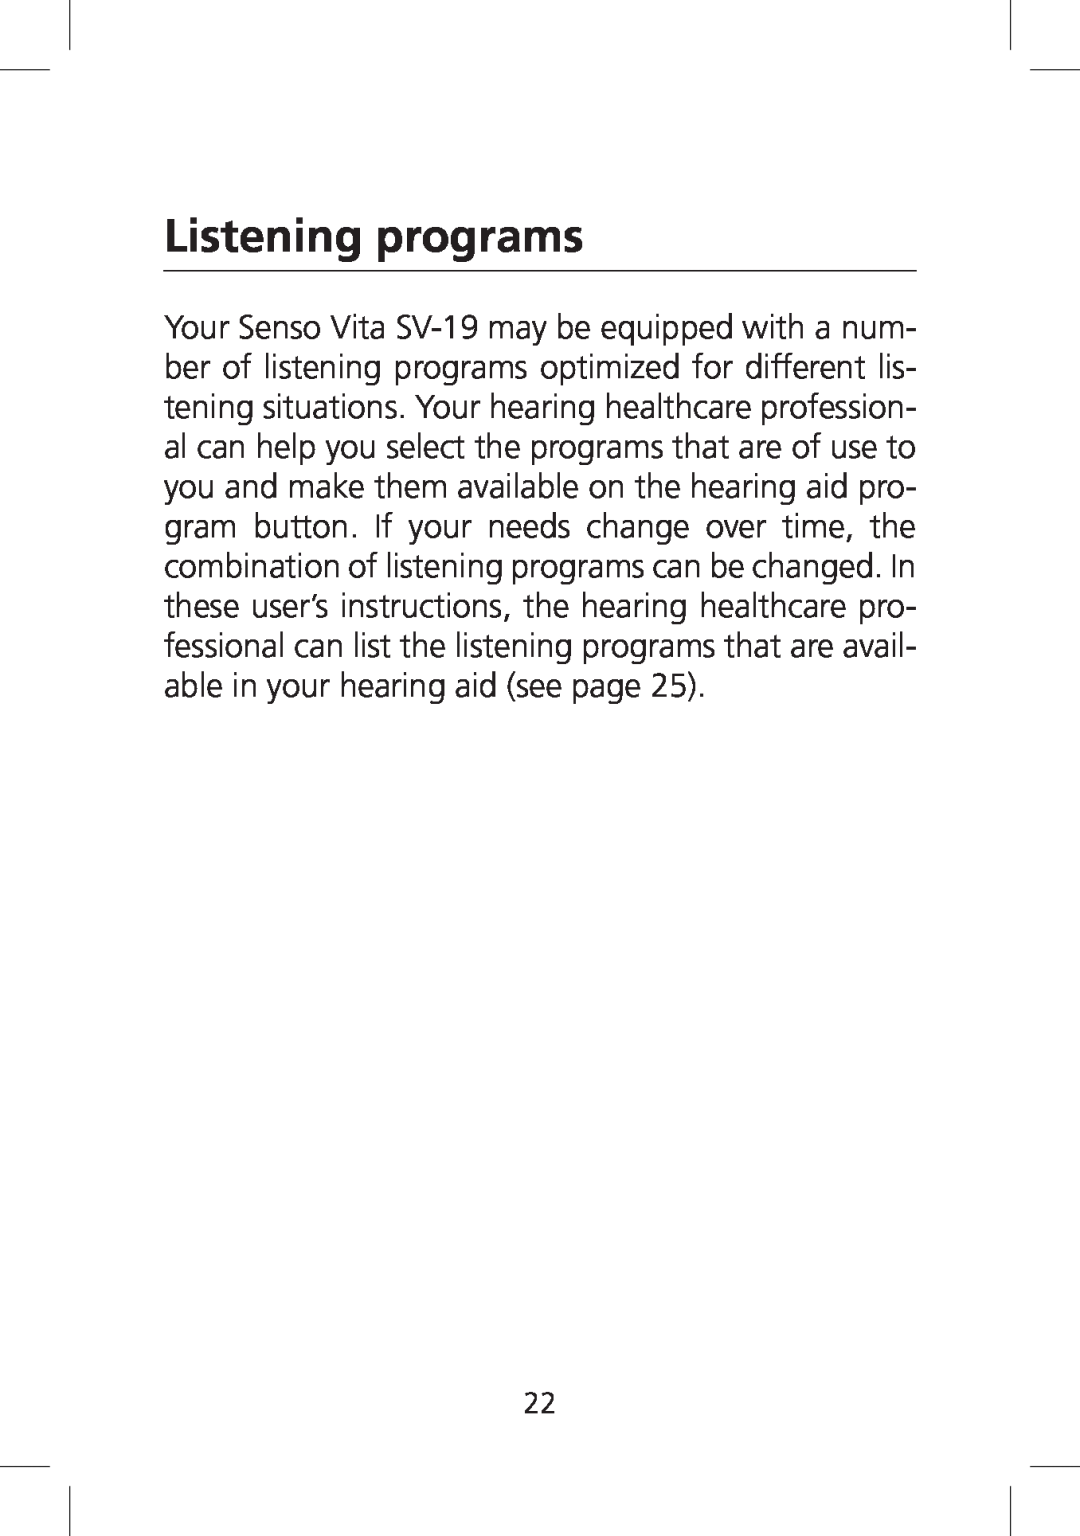 SV Sound SV-19 manual Listening programs 